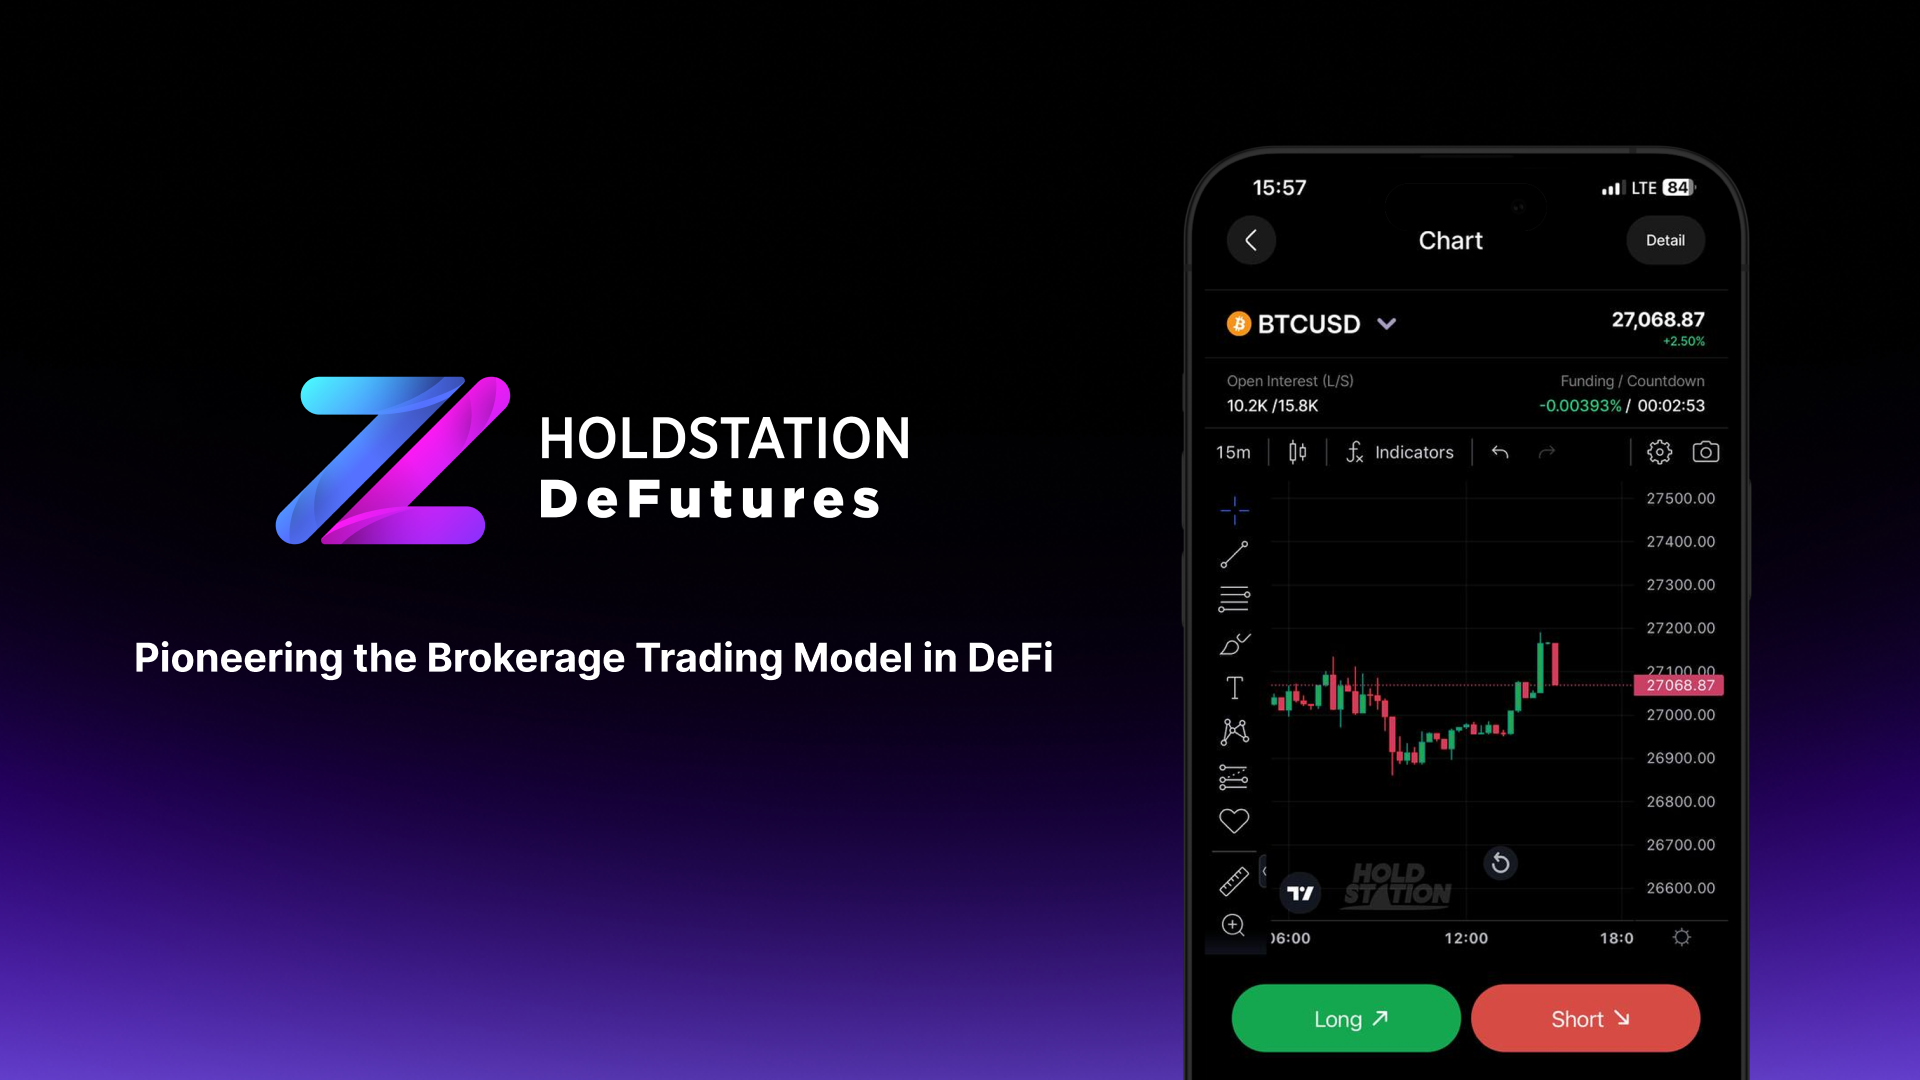 Holdstation Defutures: Pioneering the Brokerage Trading Model in DeFi